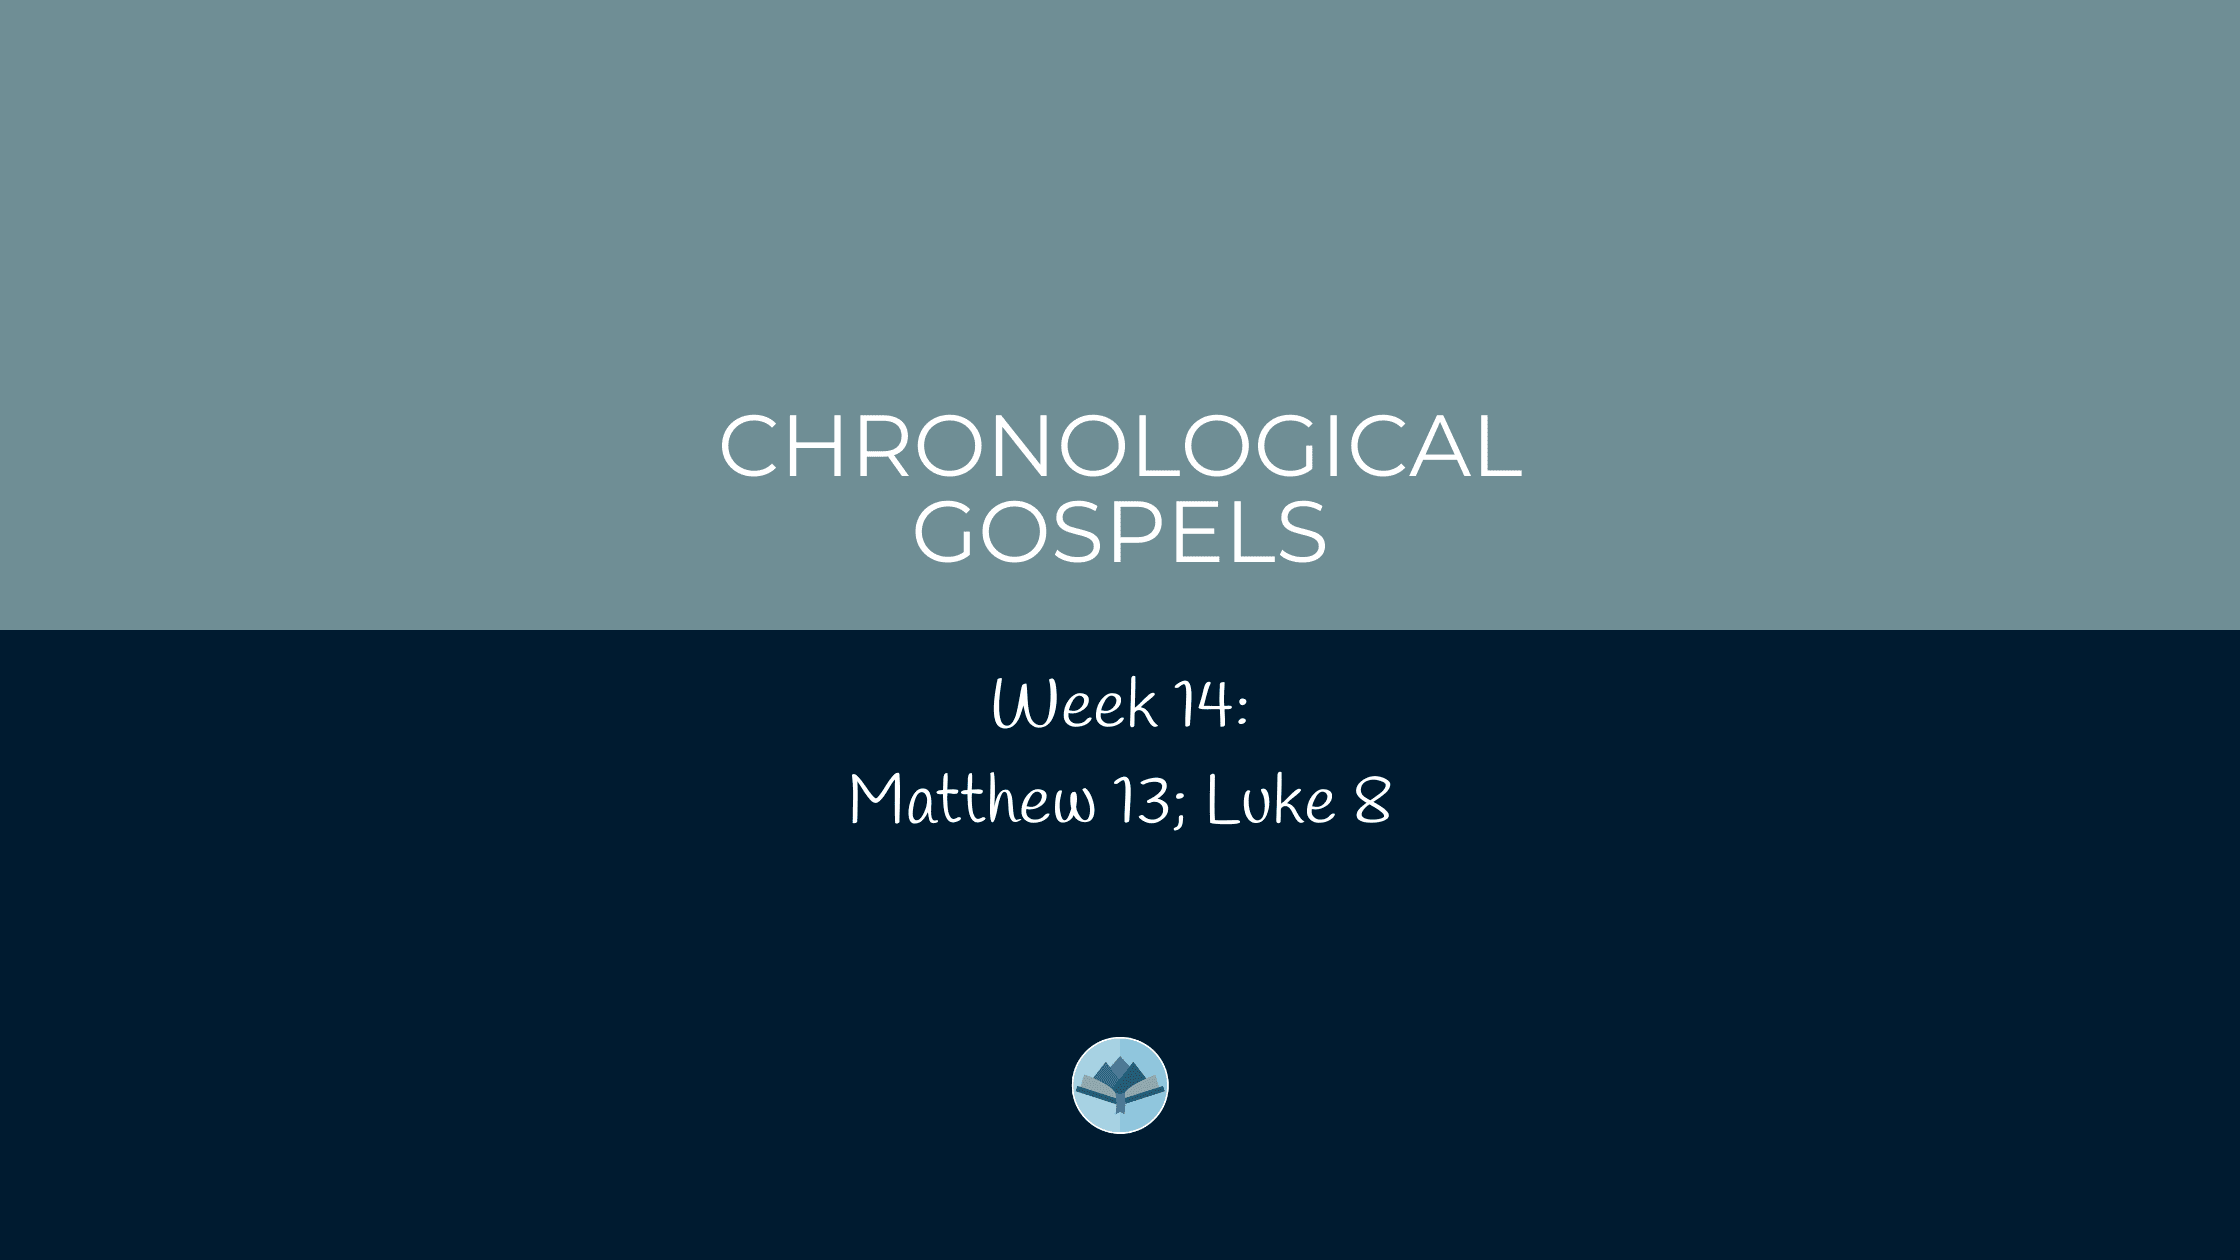 Chronological Gospels Week 14 Matthew 13; Luke 8